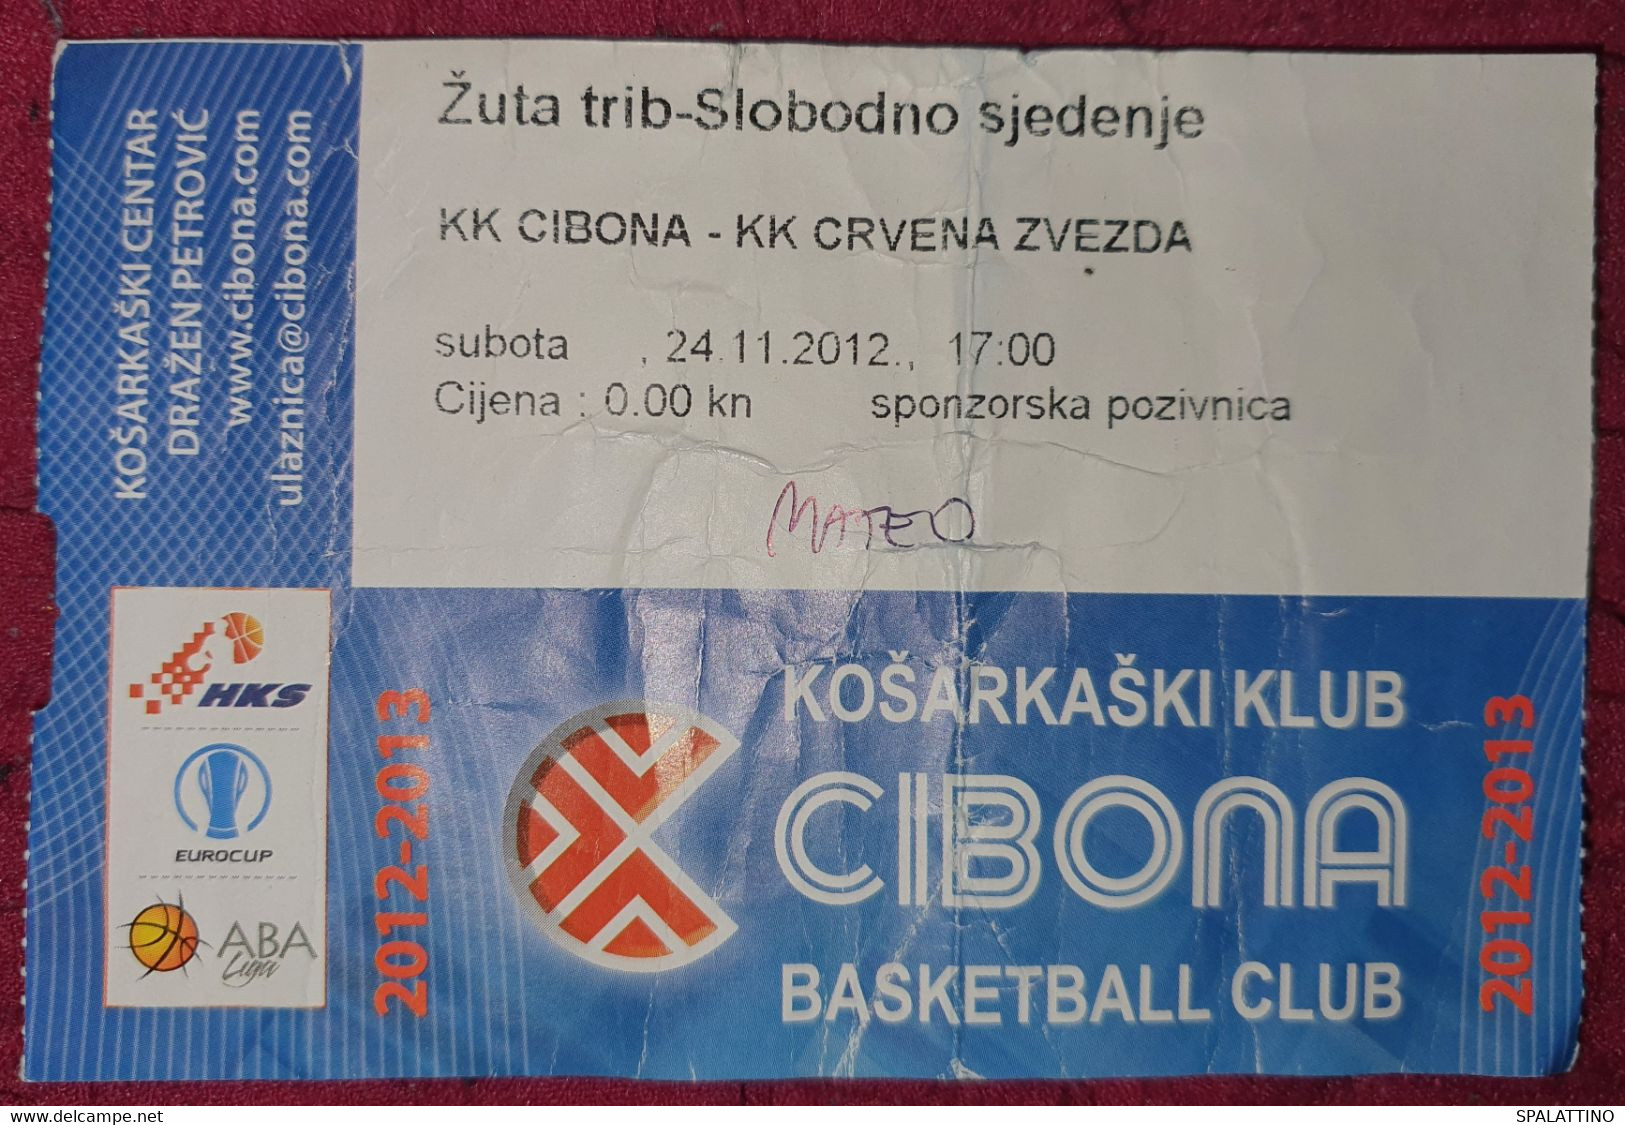 KK CIBONA ZAGREB - KK CRVENA ZVEZDA, ABA LEAGUE 2012/2013, MATCH TICKET - Abbigliamento, Souvenirs & Varie